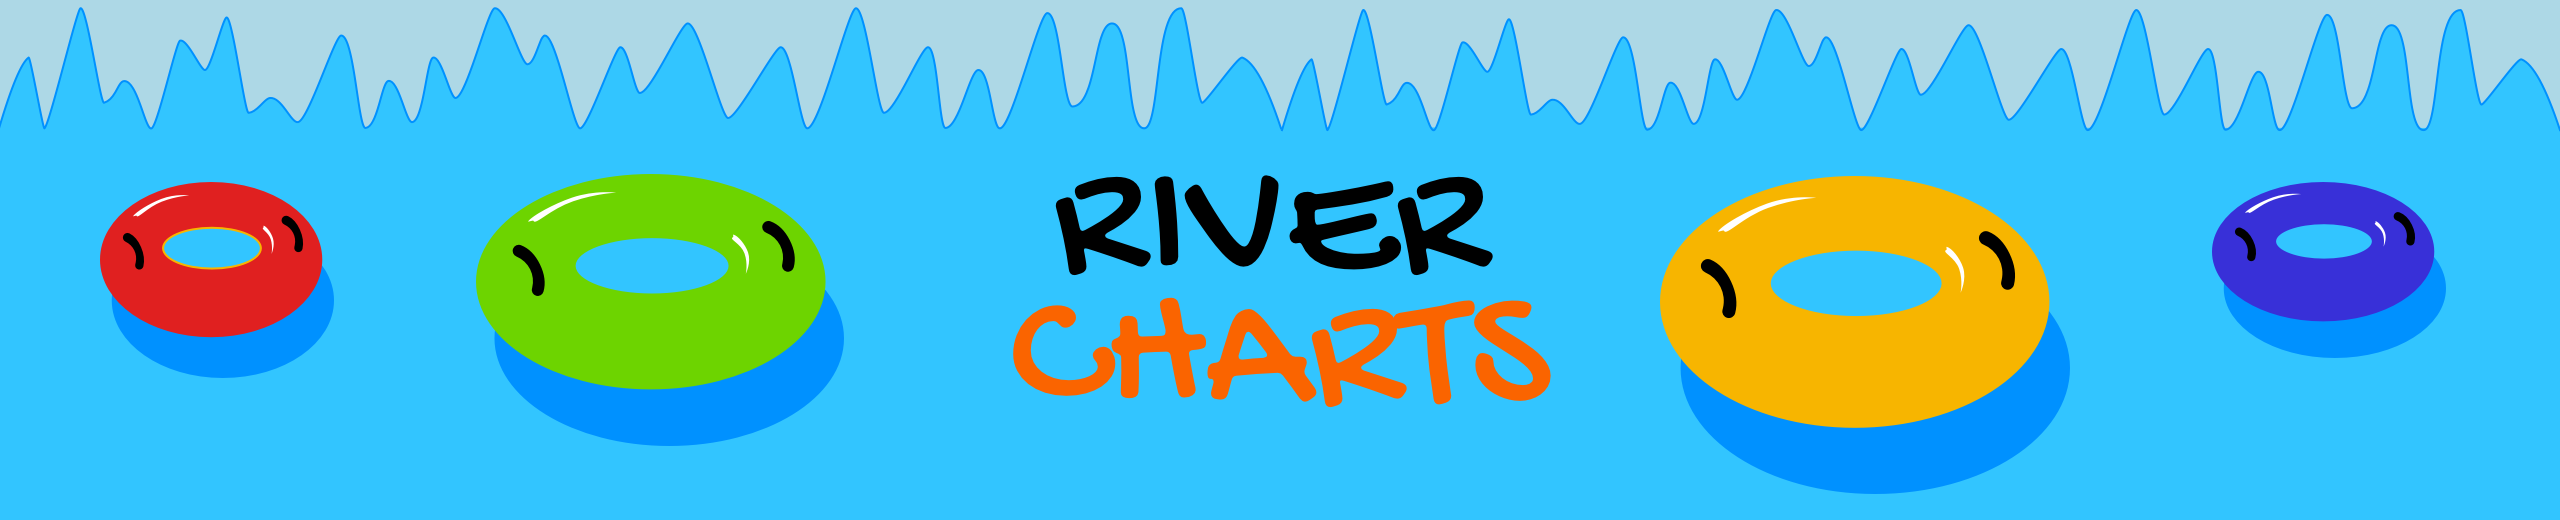 River Charts